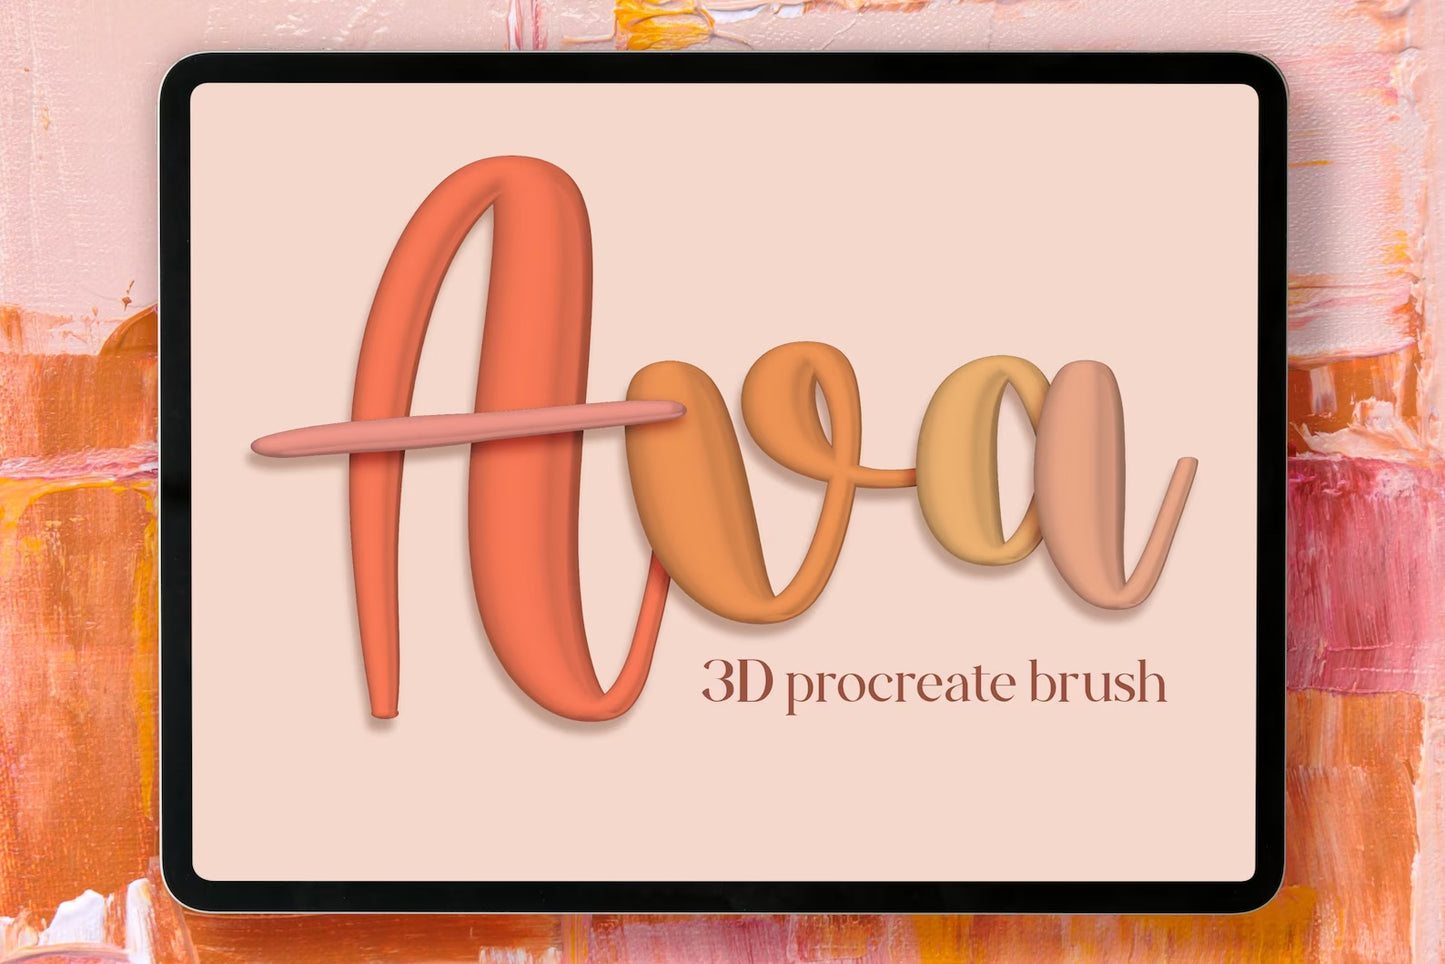 Ava 3D Procreate Brush